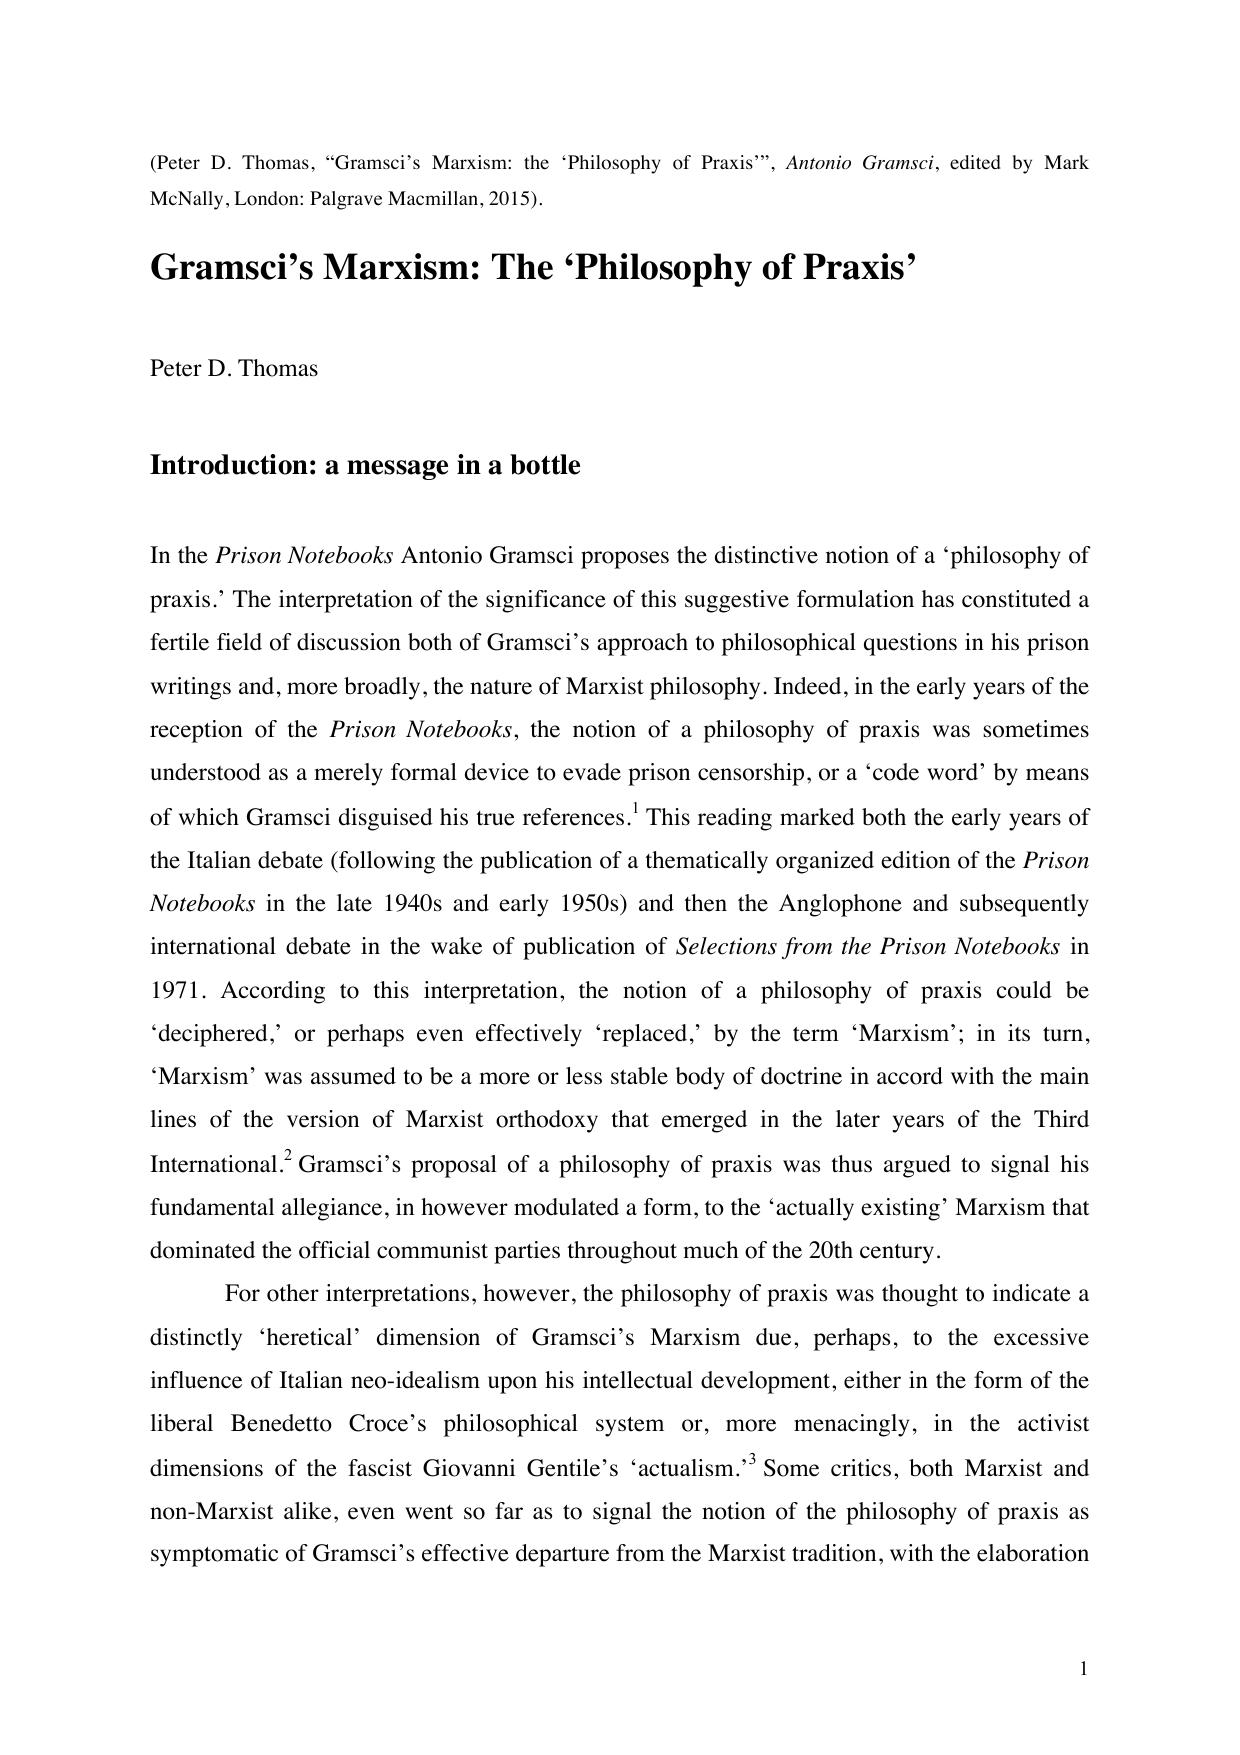 Gramsci’s Marxism - The 'Philosophy of Praxis' - Paper